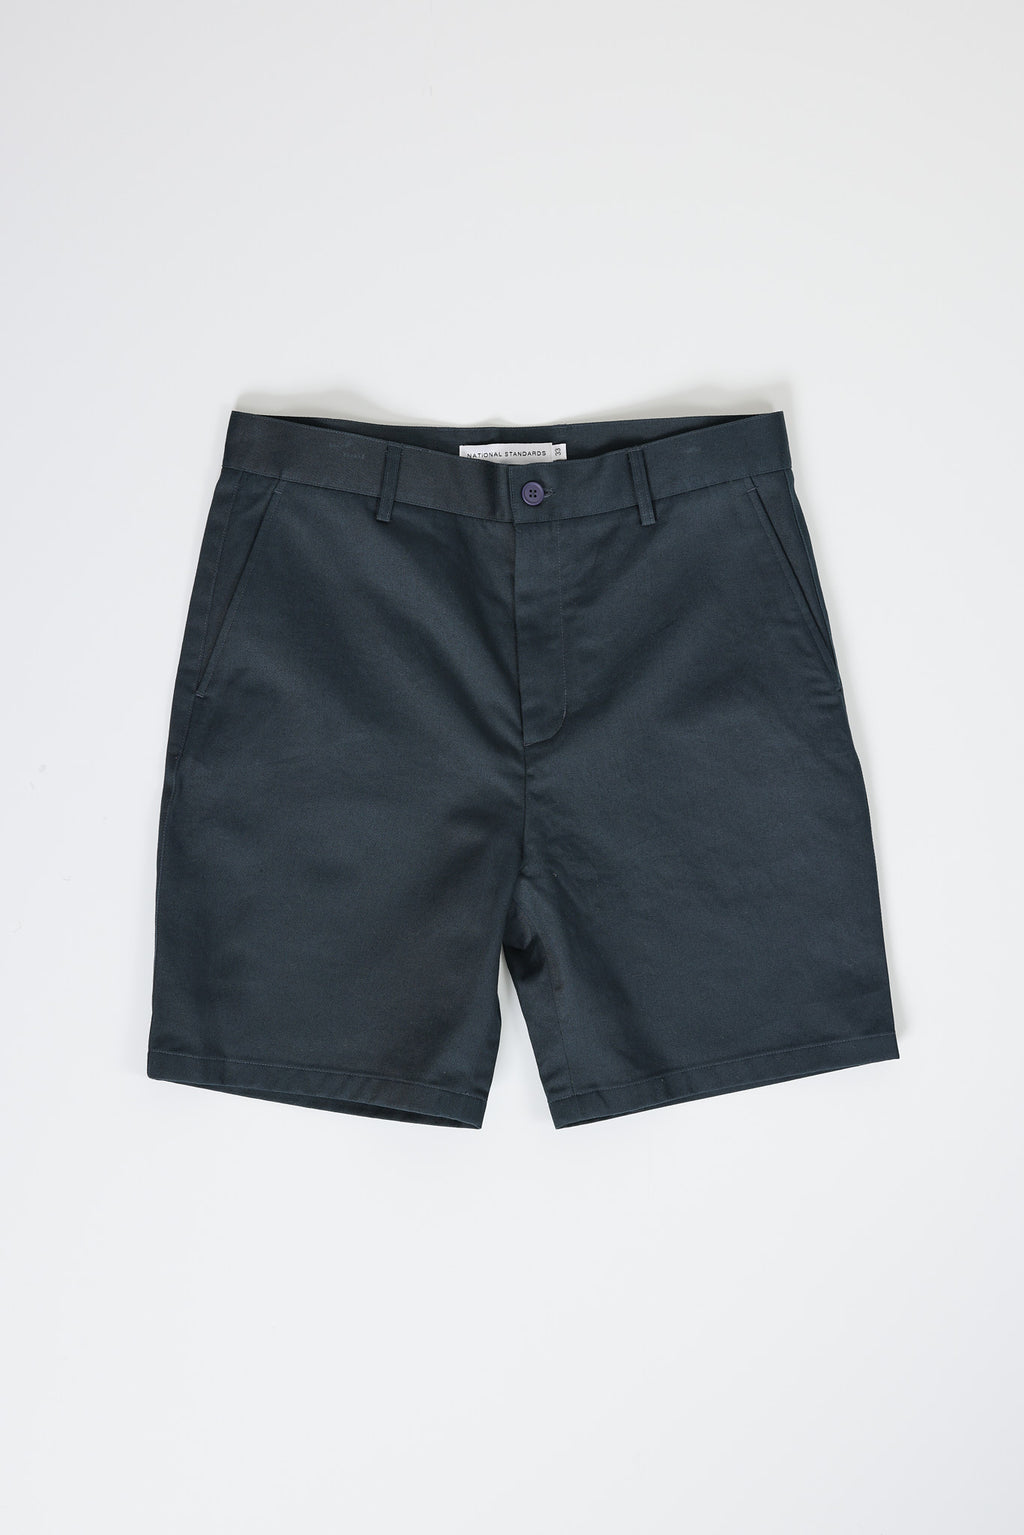 Japanese Chino Shorts 20s Chino Cloth in Navy 01